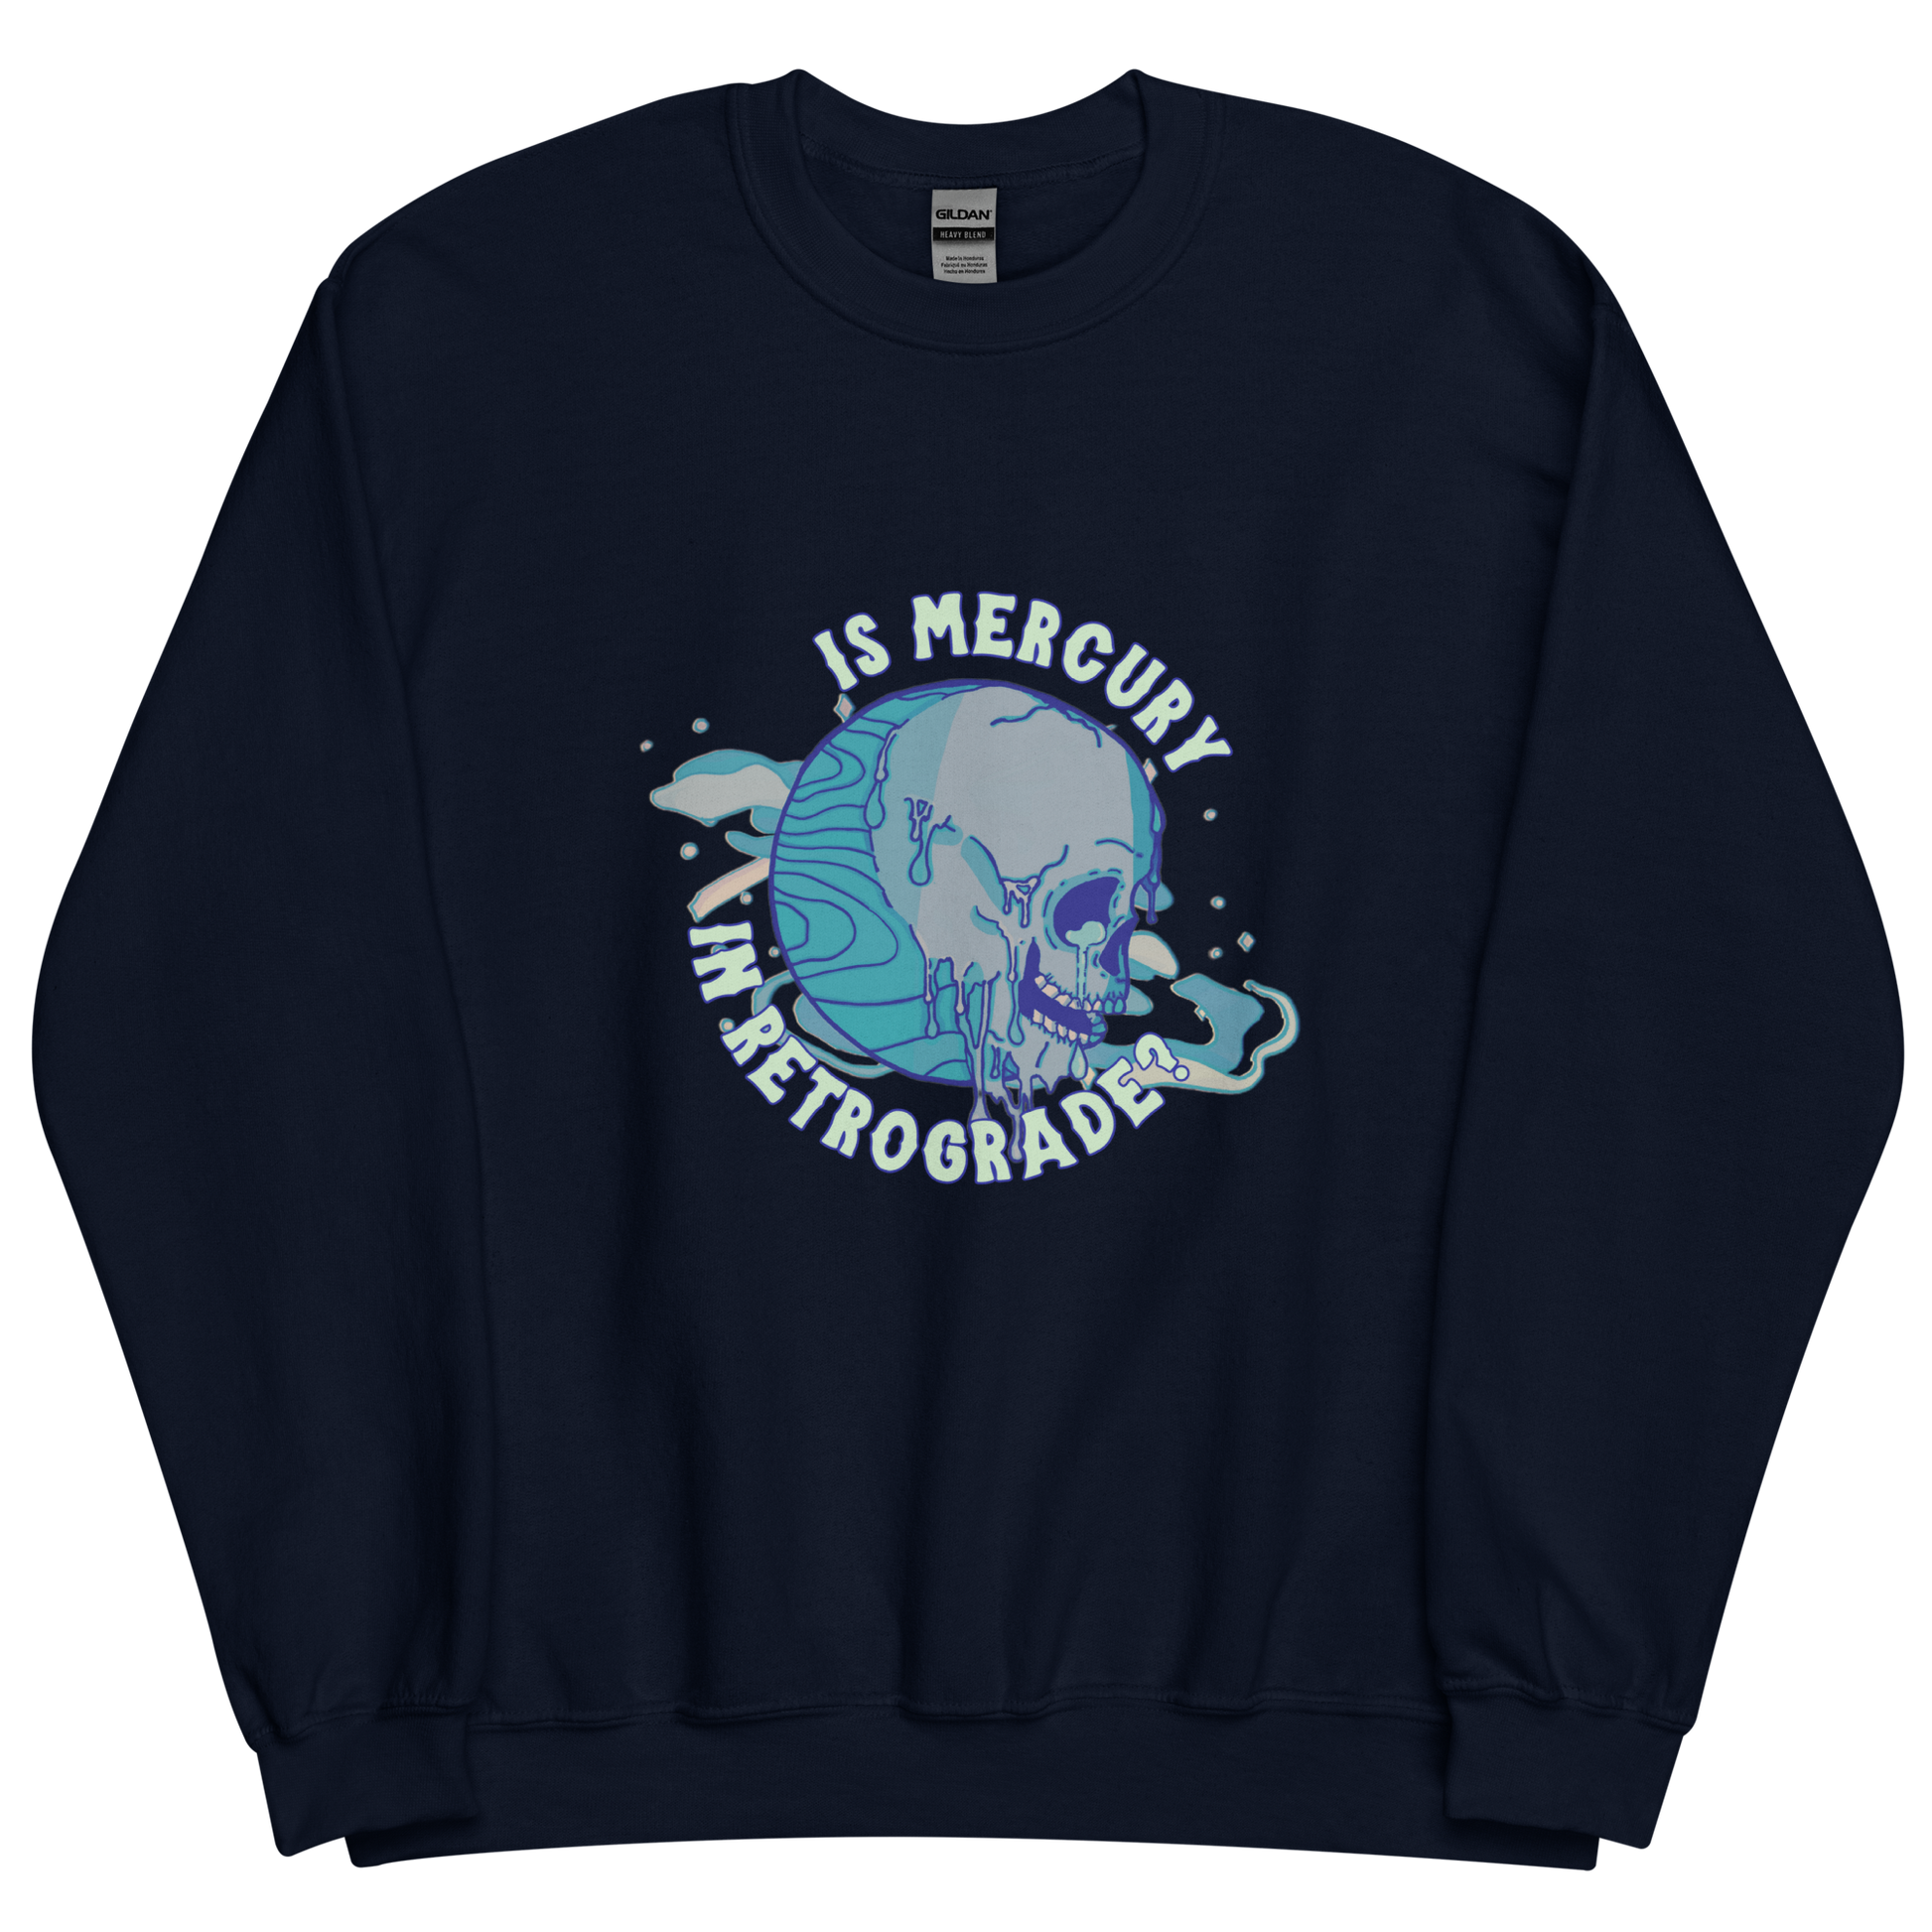 is mercury in retrograde? sweatshirt in navy - gaslit apparel